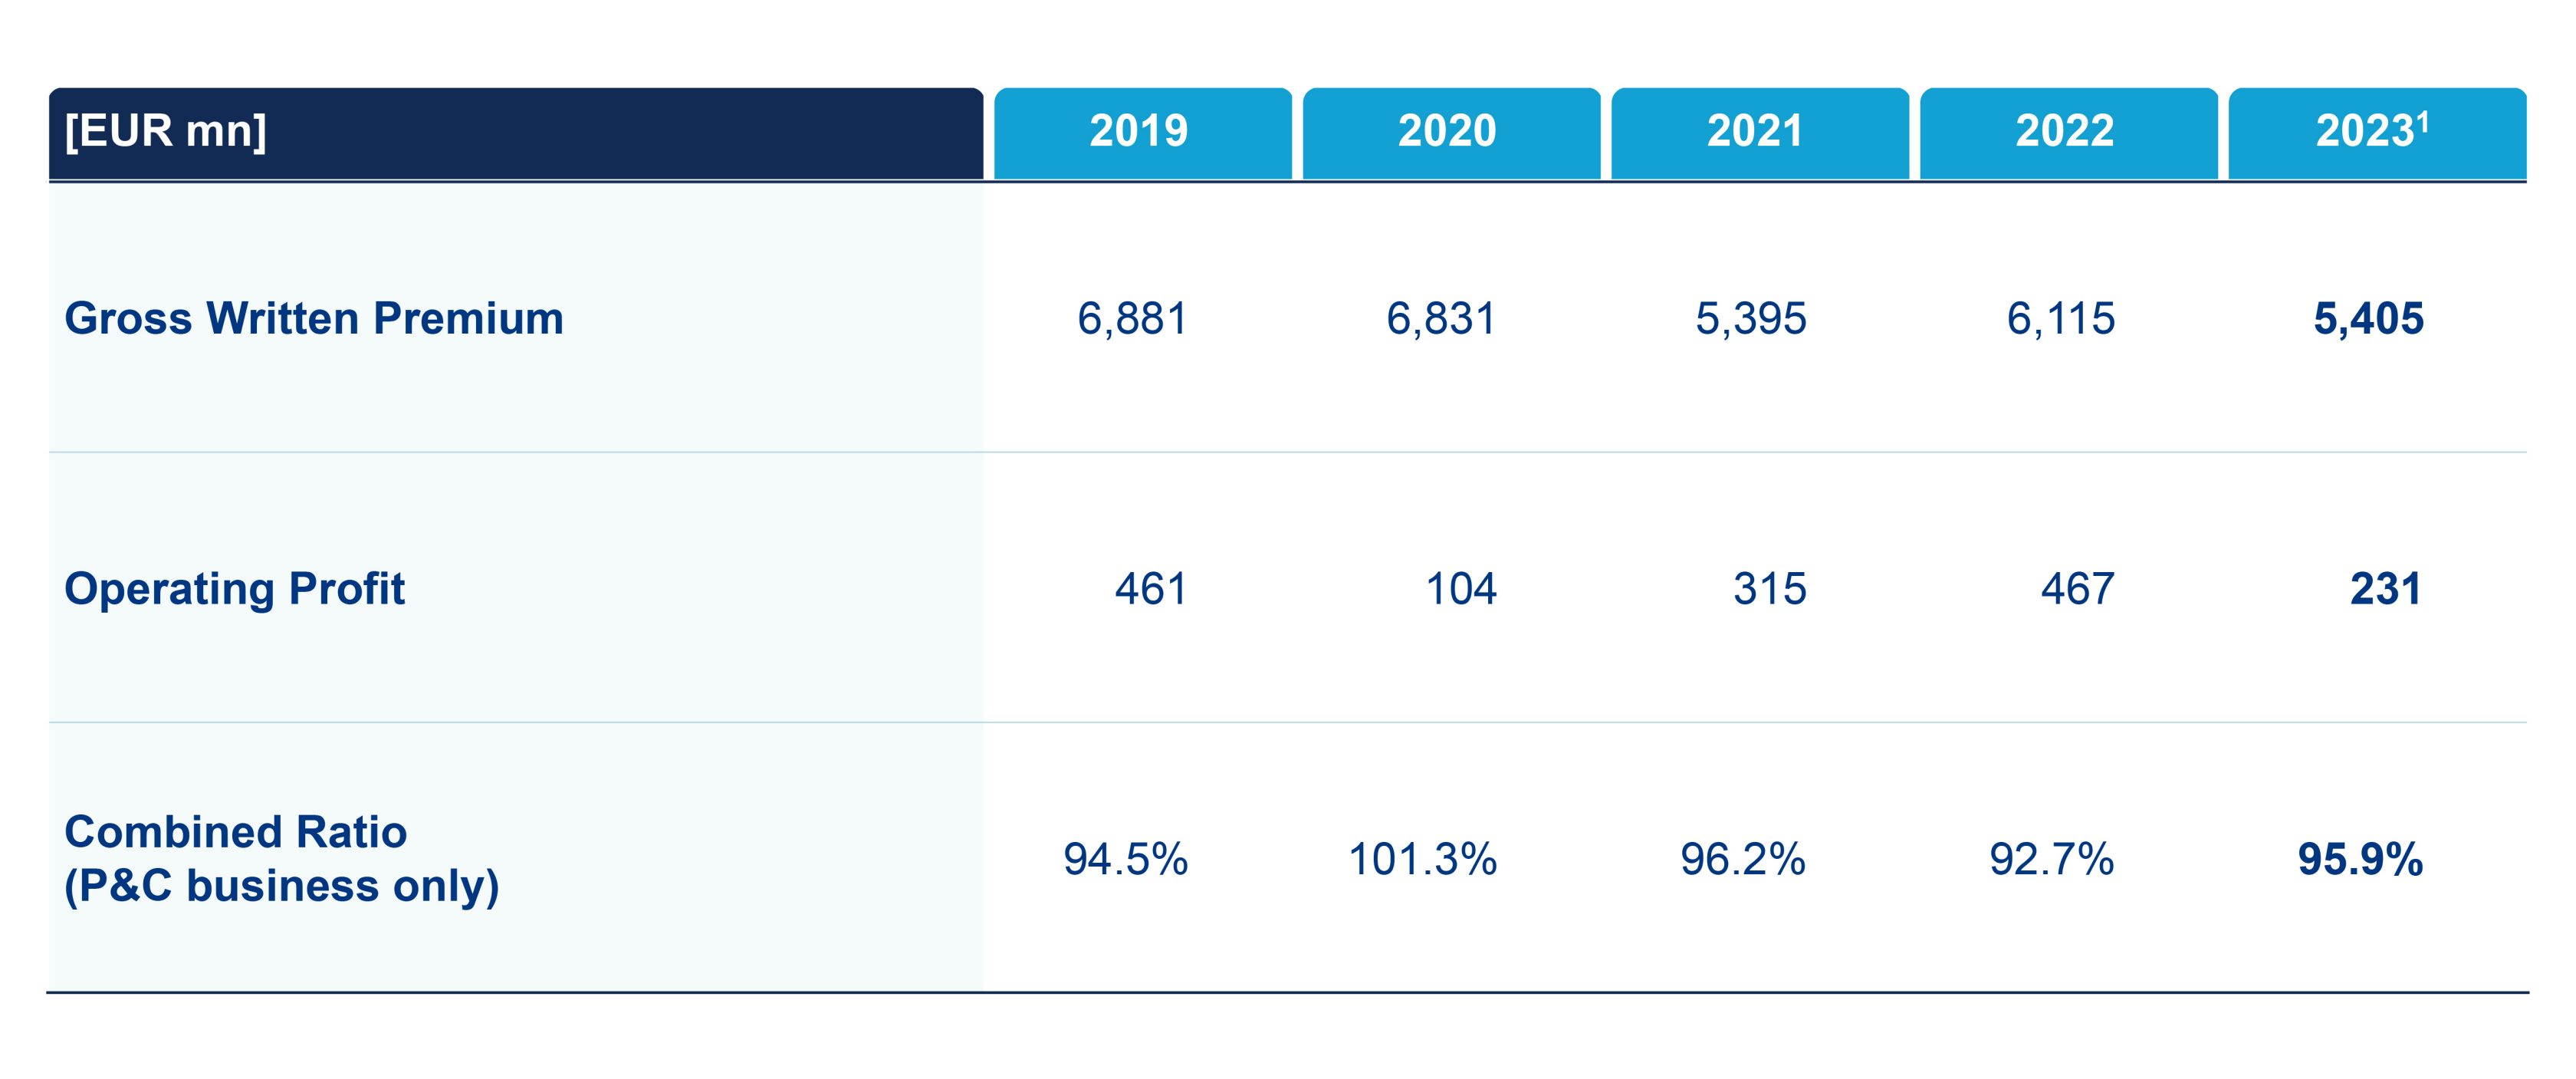 Allianz Re Key Figures 2022